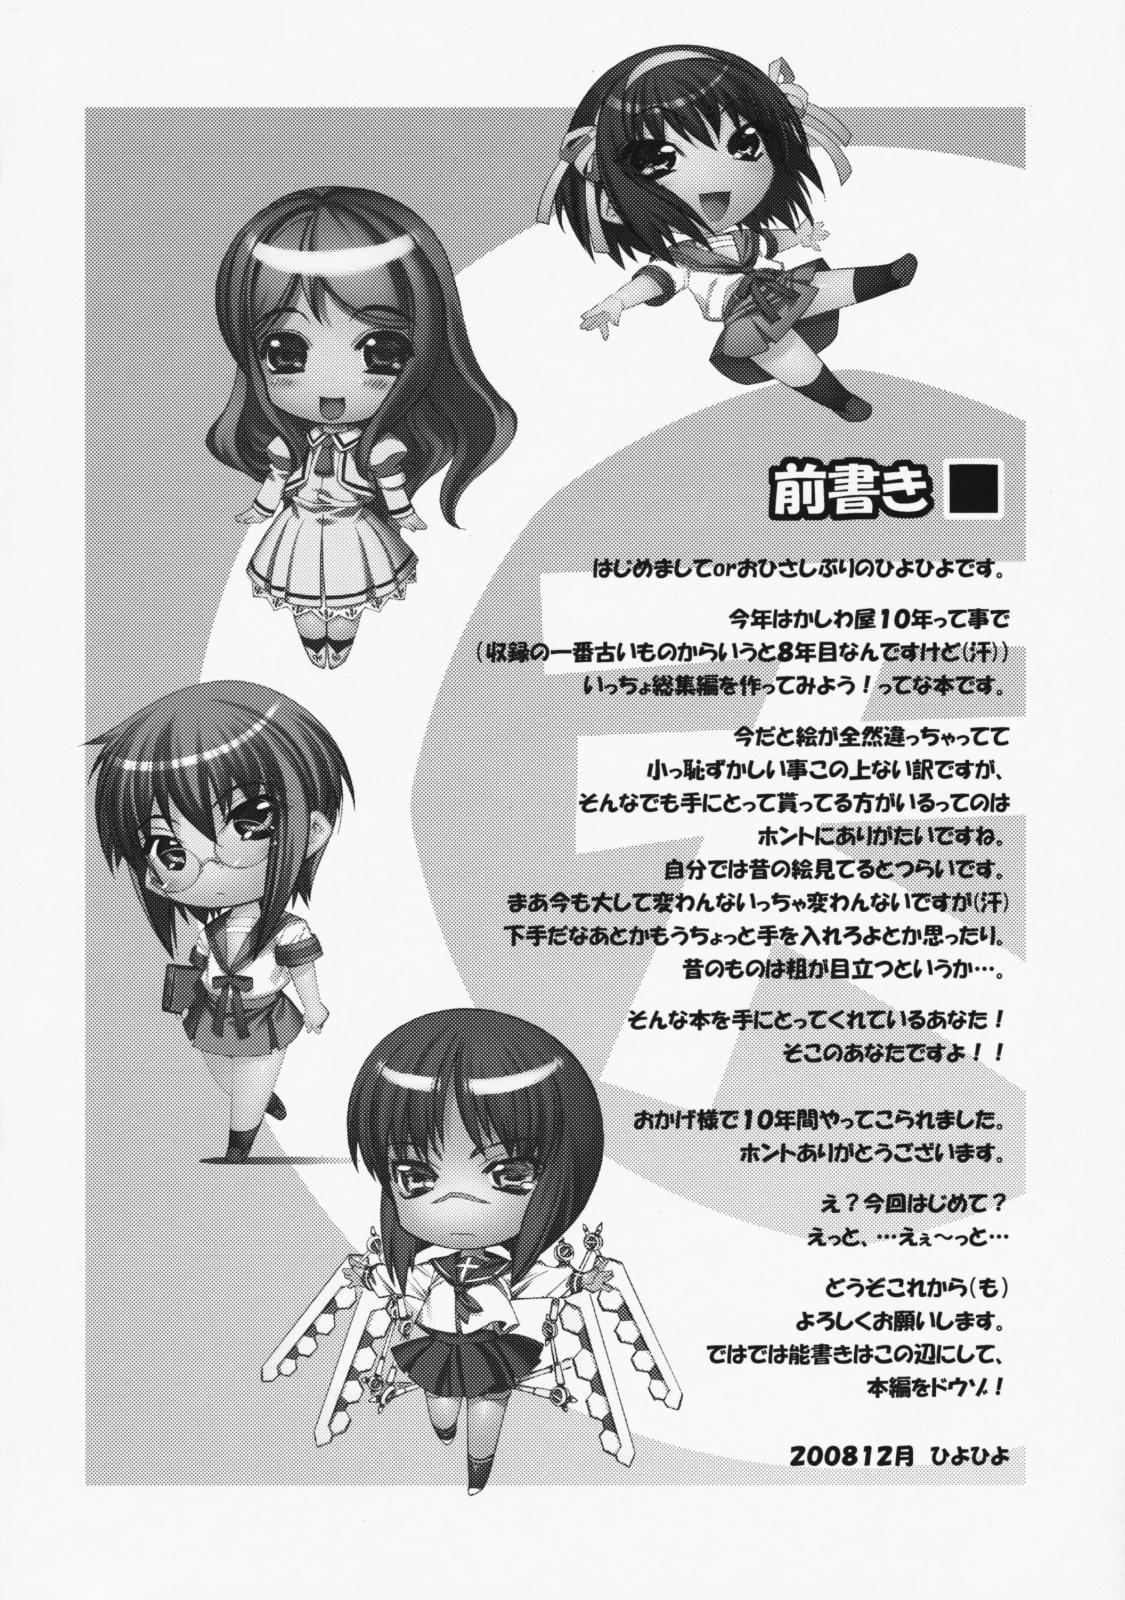 Fishnet Kashiwa-ya Circle 10th Anniversary - Naruto Love hina Pretty cure Busou renkin Cosmic baton girl comet-san Class - Page 3